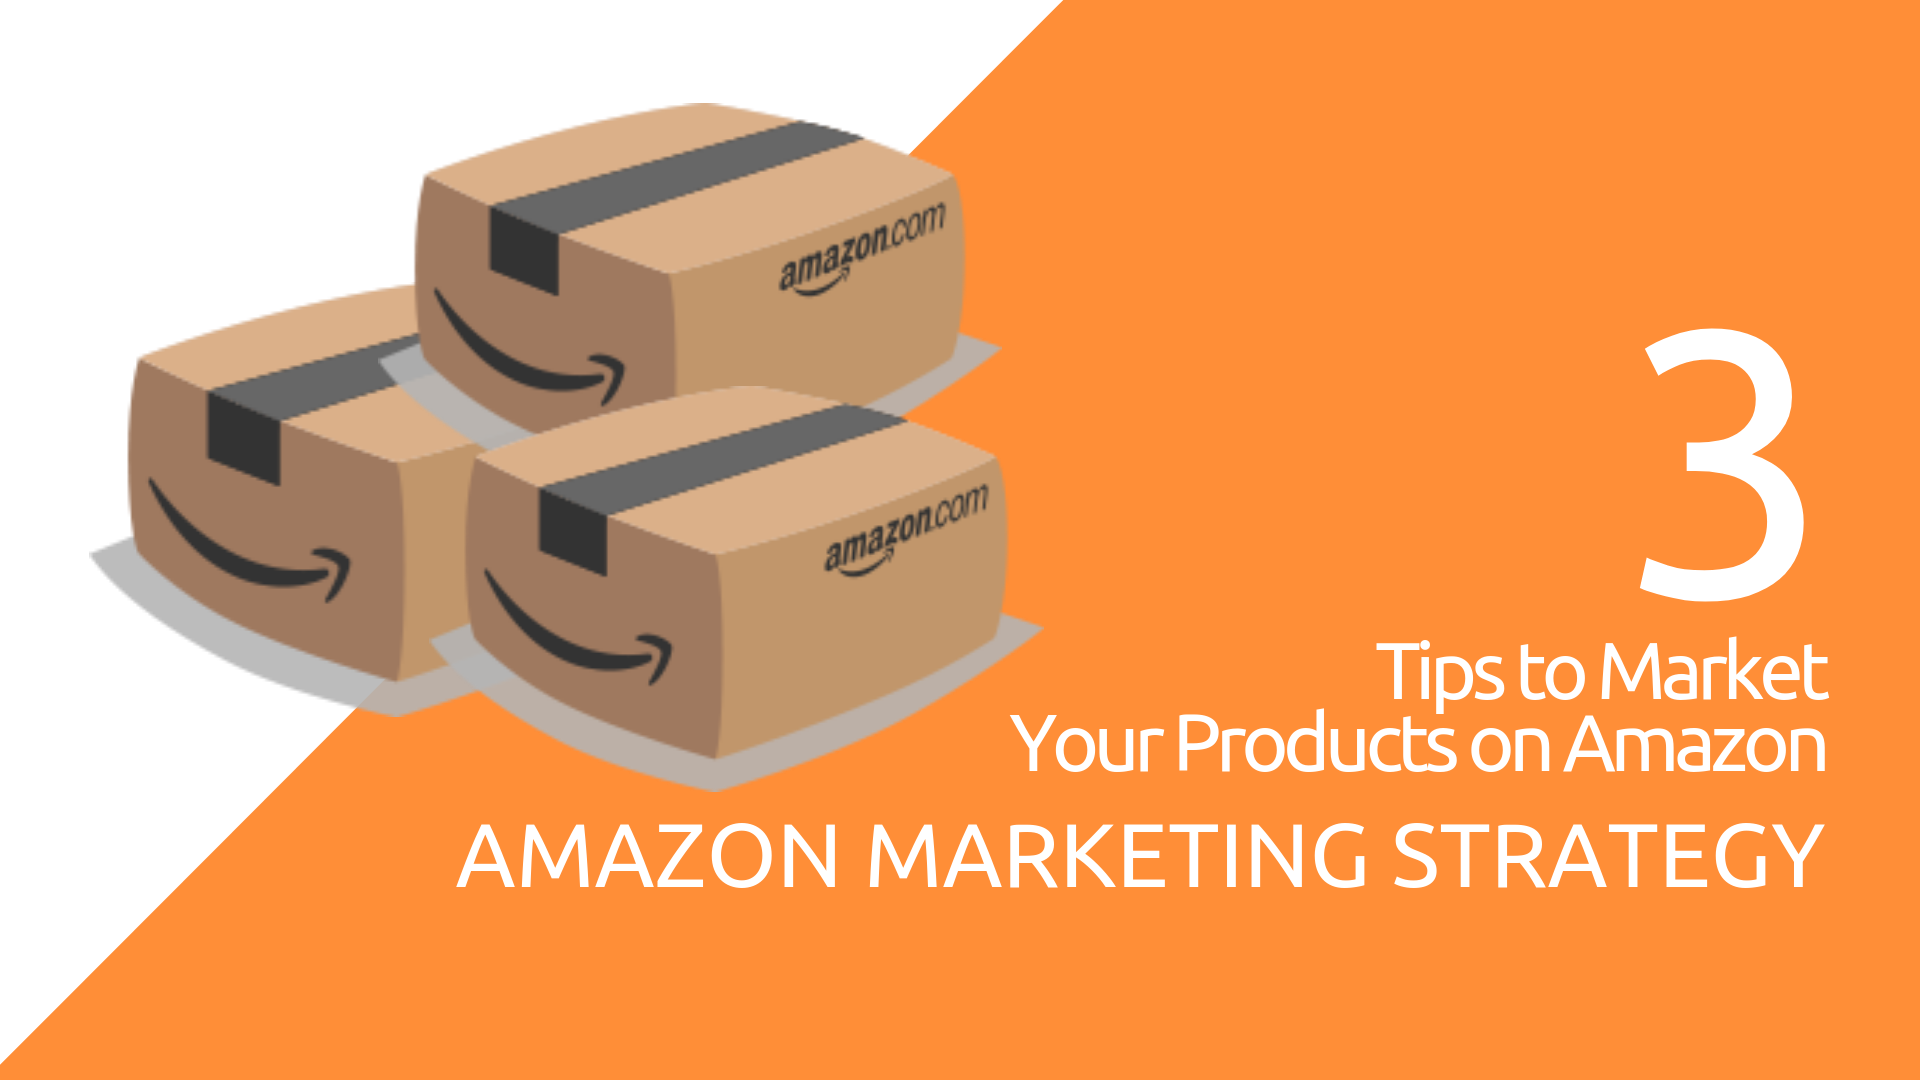 Amazon Marketing Strategy: 3 Tips to Market Your Products on Amazon